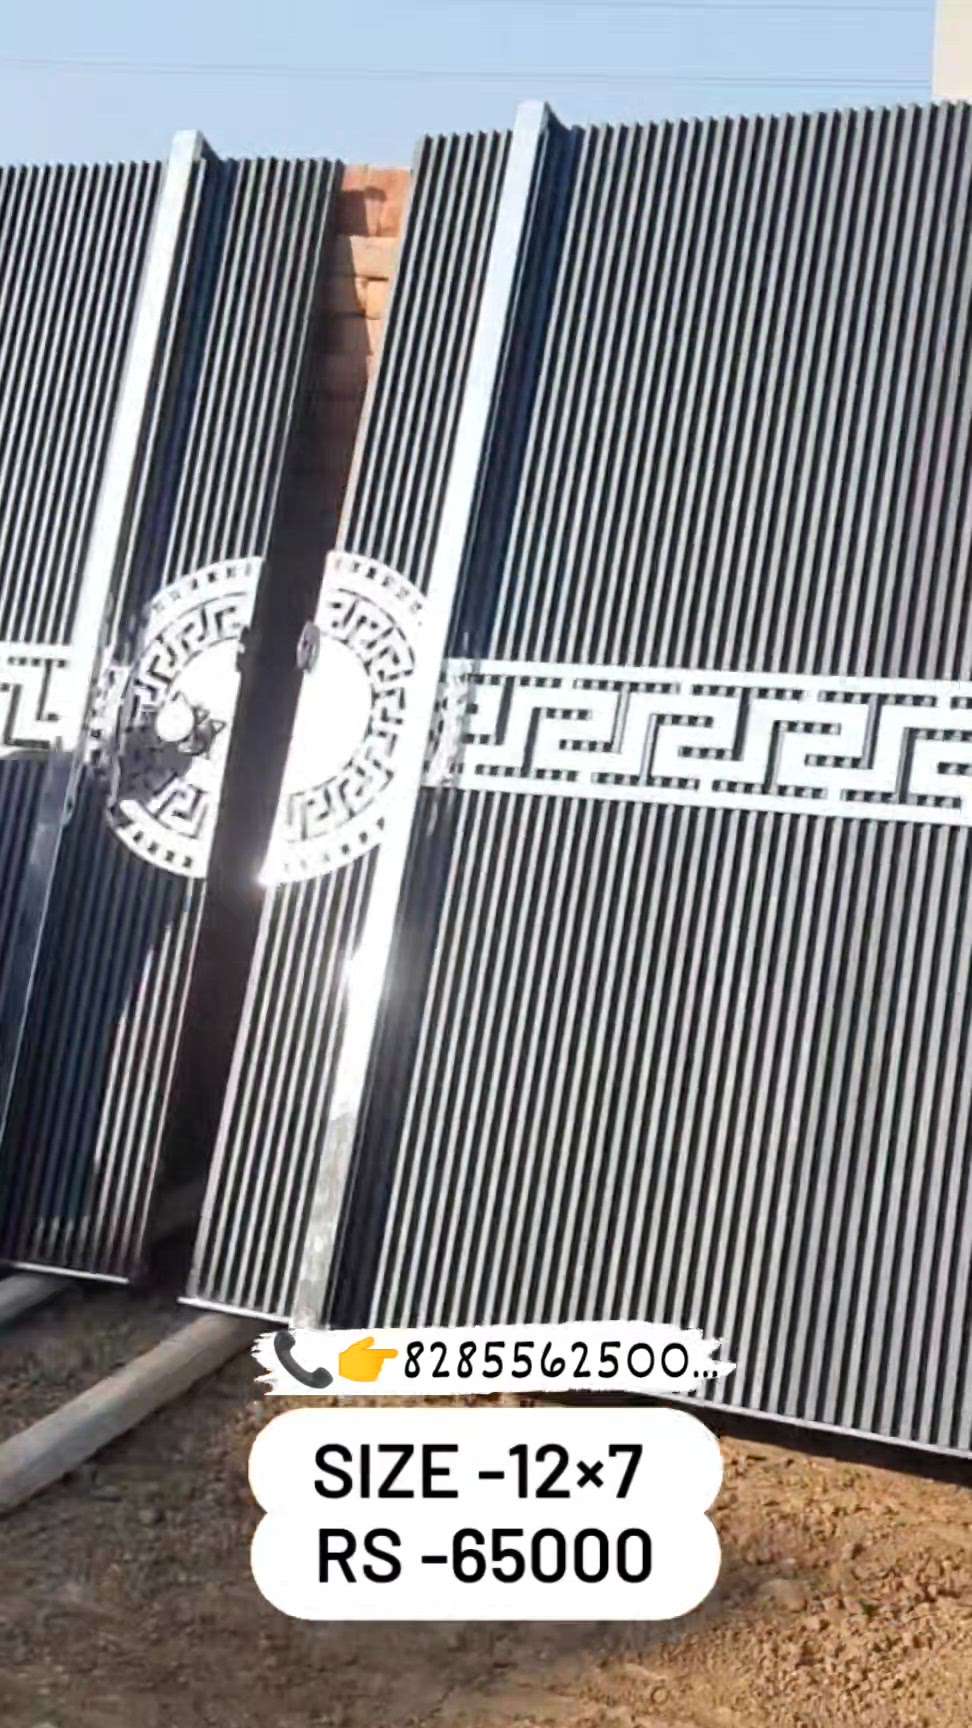 😍Steel profile gate design 📞8285562500
 steel sheet with black fantermax 😉
#Bismillahfabricationweldingwork
. contact number 👉📱 8285562500

lm welder..


.
.
.
.
. #steelgatedesign  #moderngatedesign  #moderngate  #kologatedesign  #kolo  #explorepage✨  #trendydesign  
. #koloapp  #koloviral  #trendinggatedisign  #trendingsteelgate  #trendingvideo  #steelgatedesign